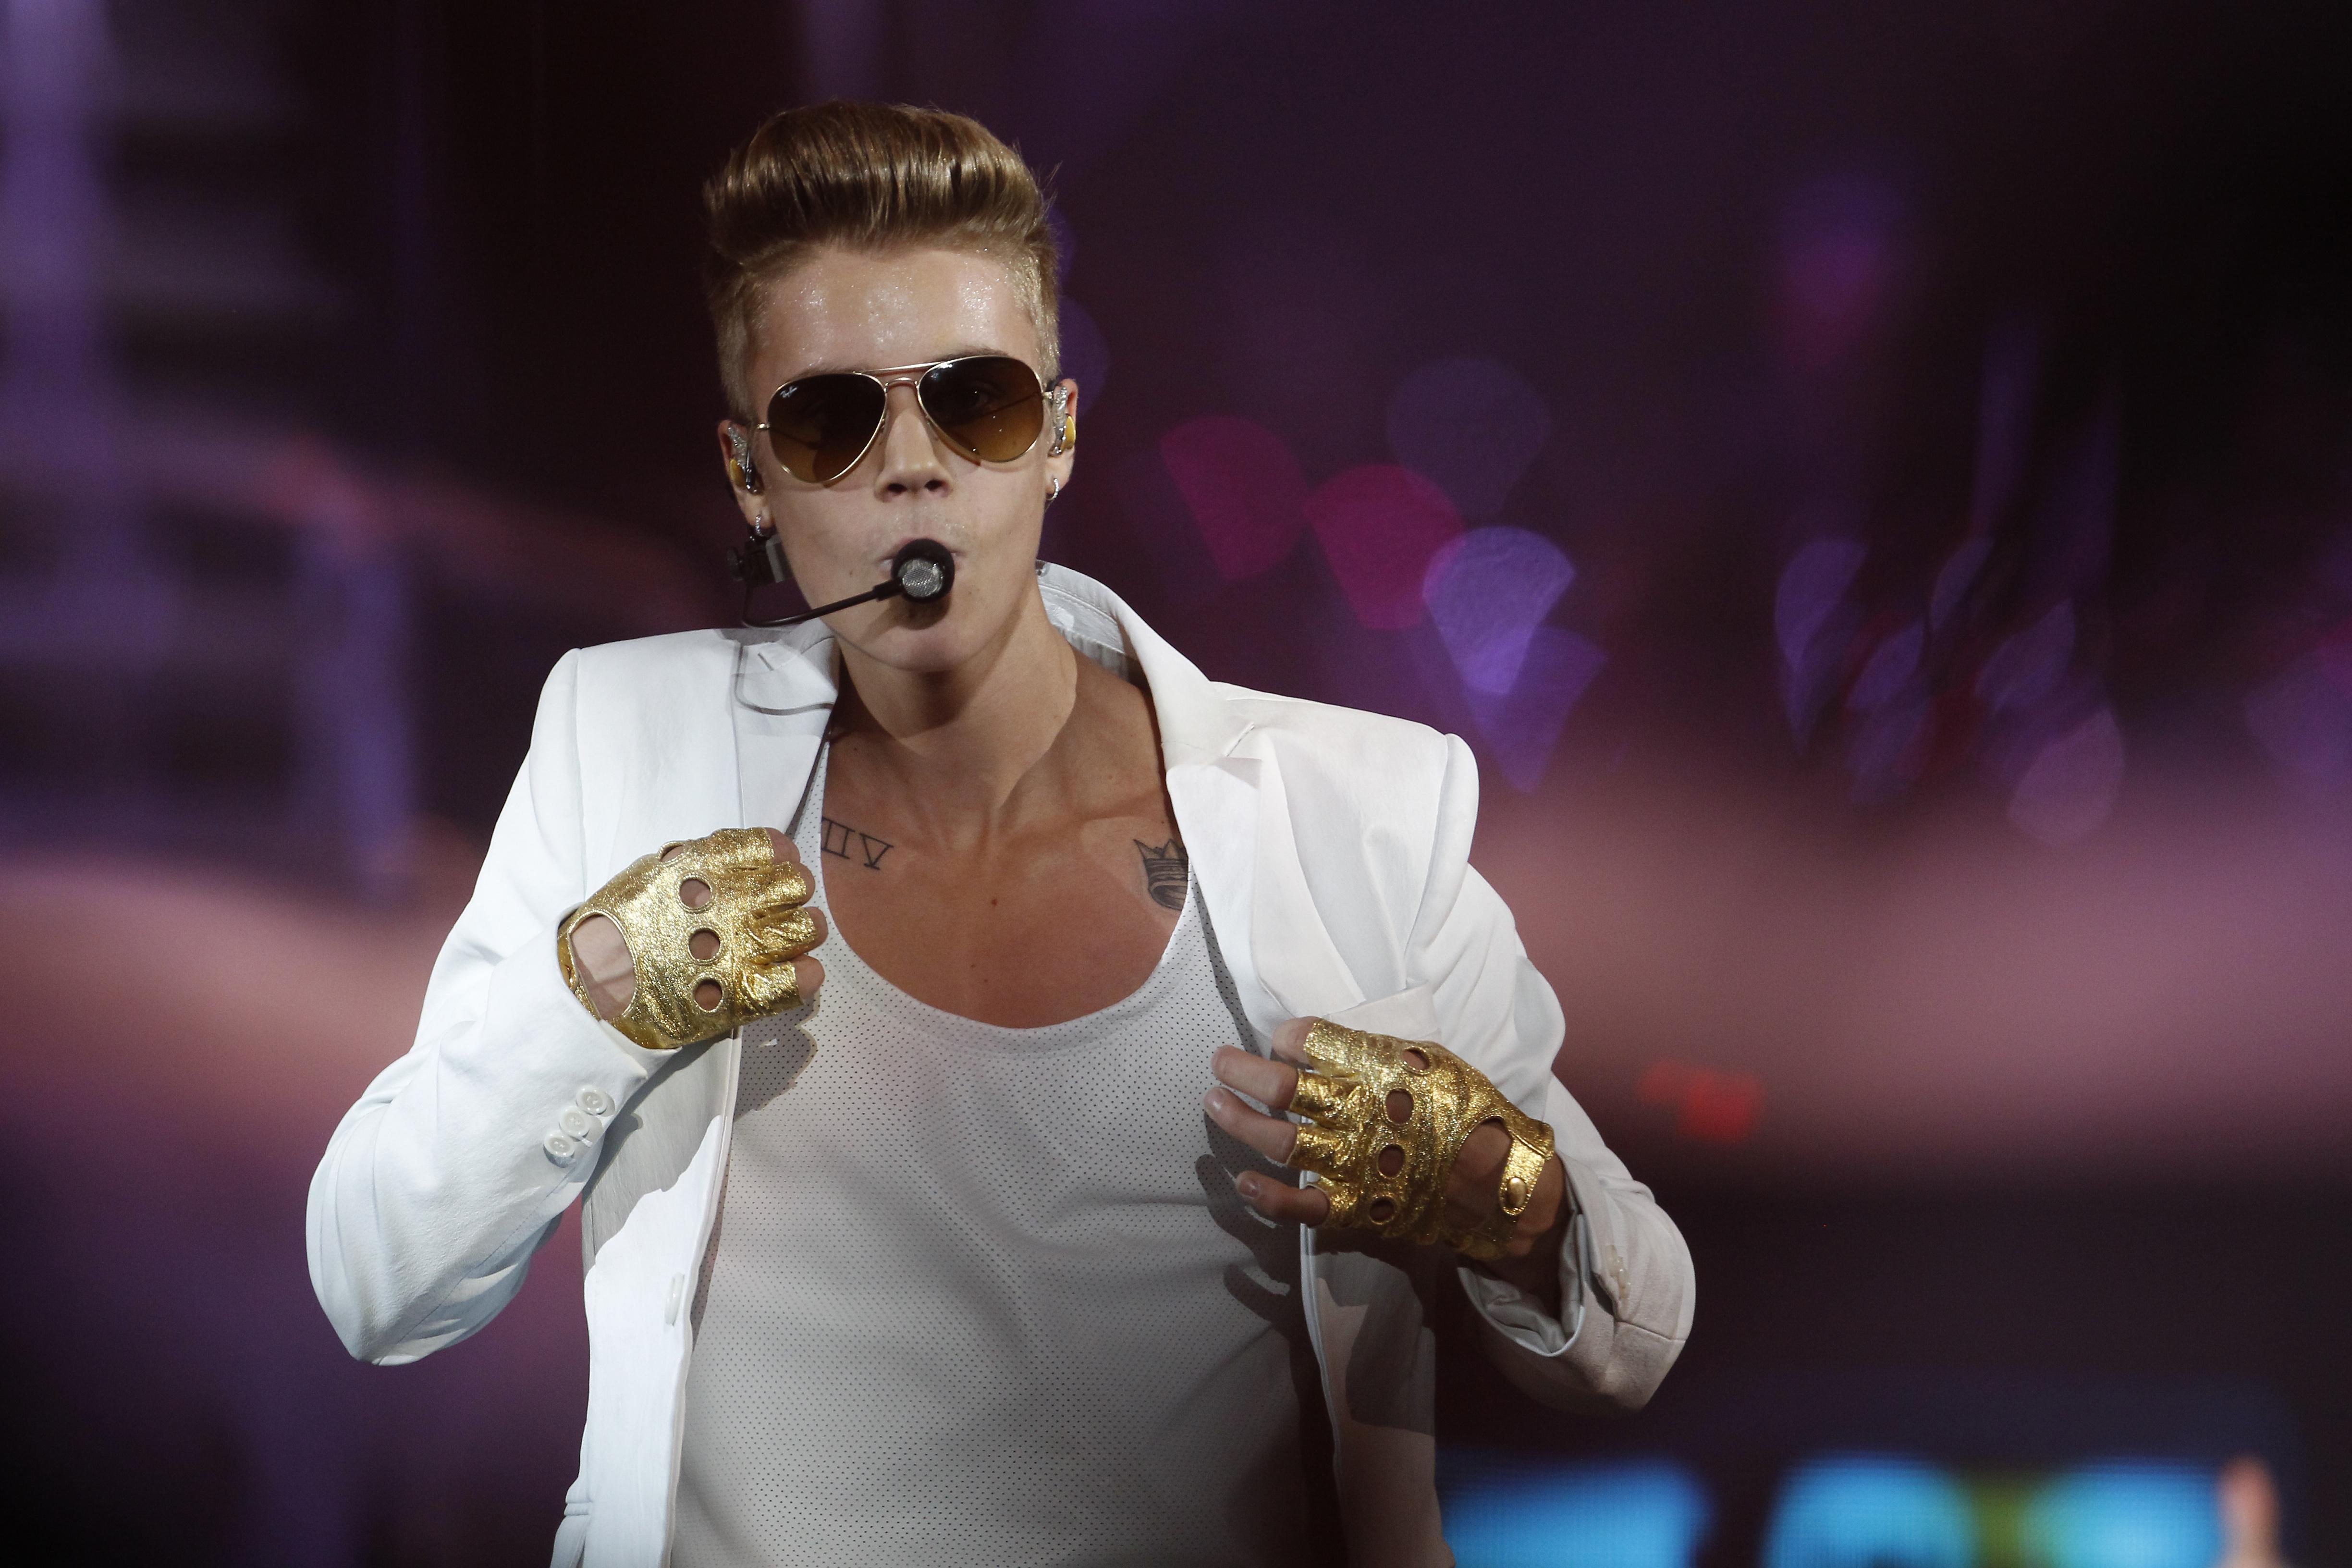 Justin Bieber on Stage -4k Wallpaper. Free 4K Wallpaper